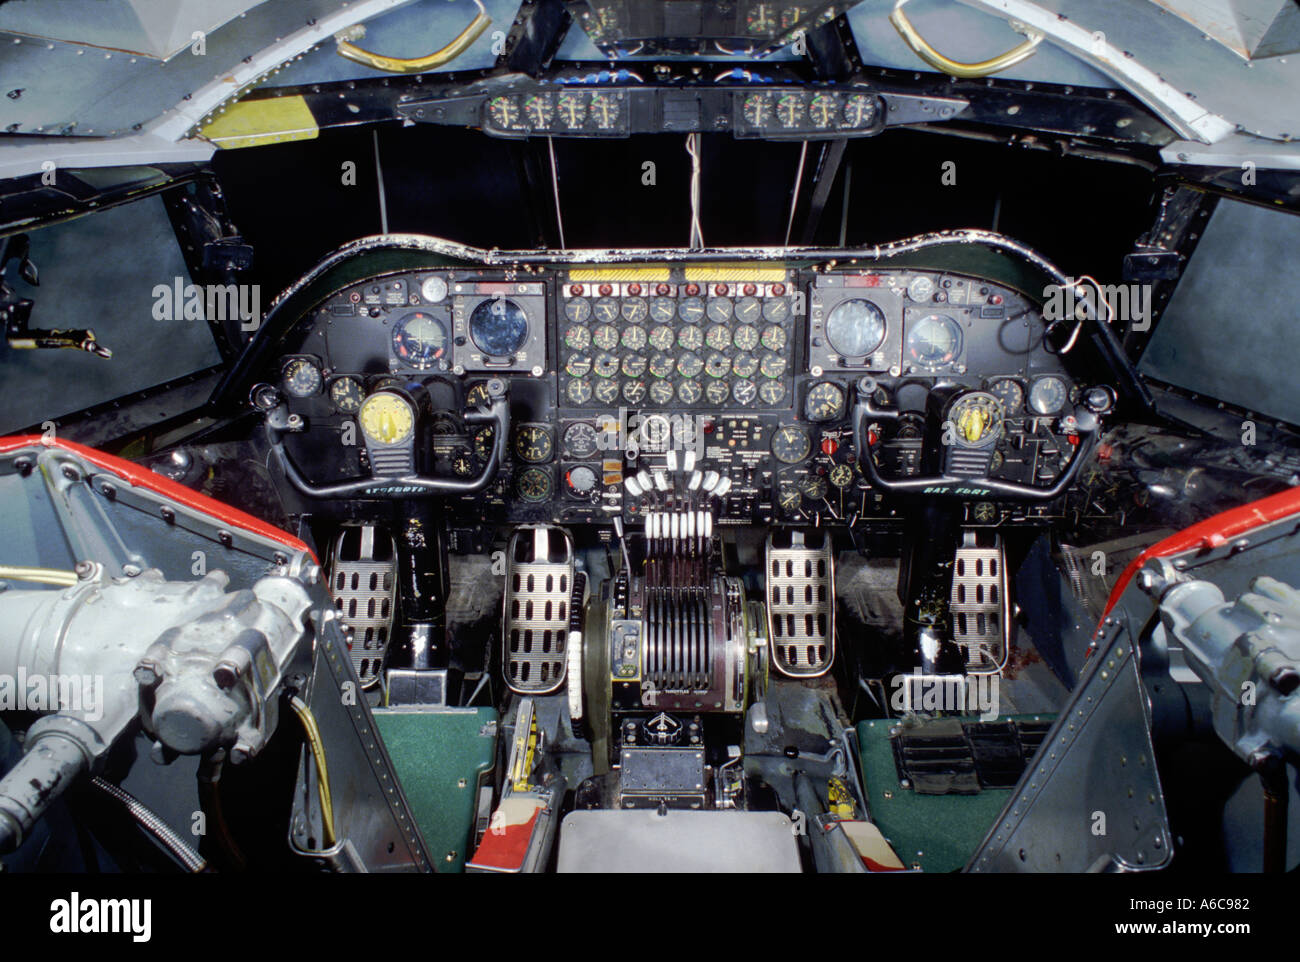 b52 cockpit